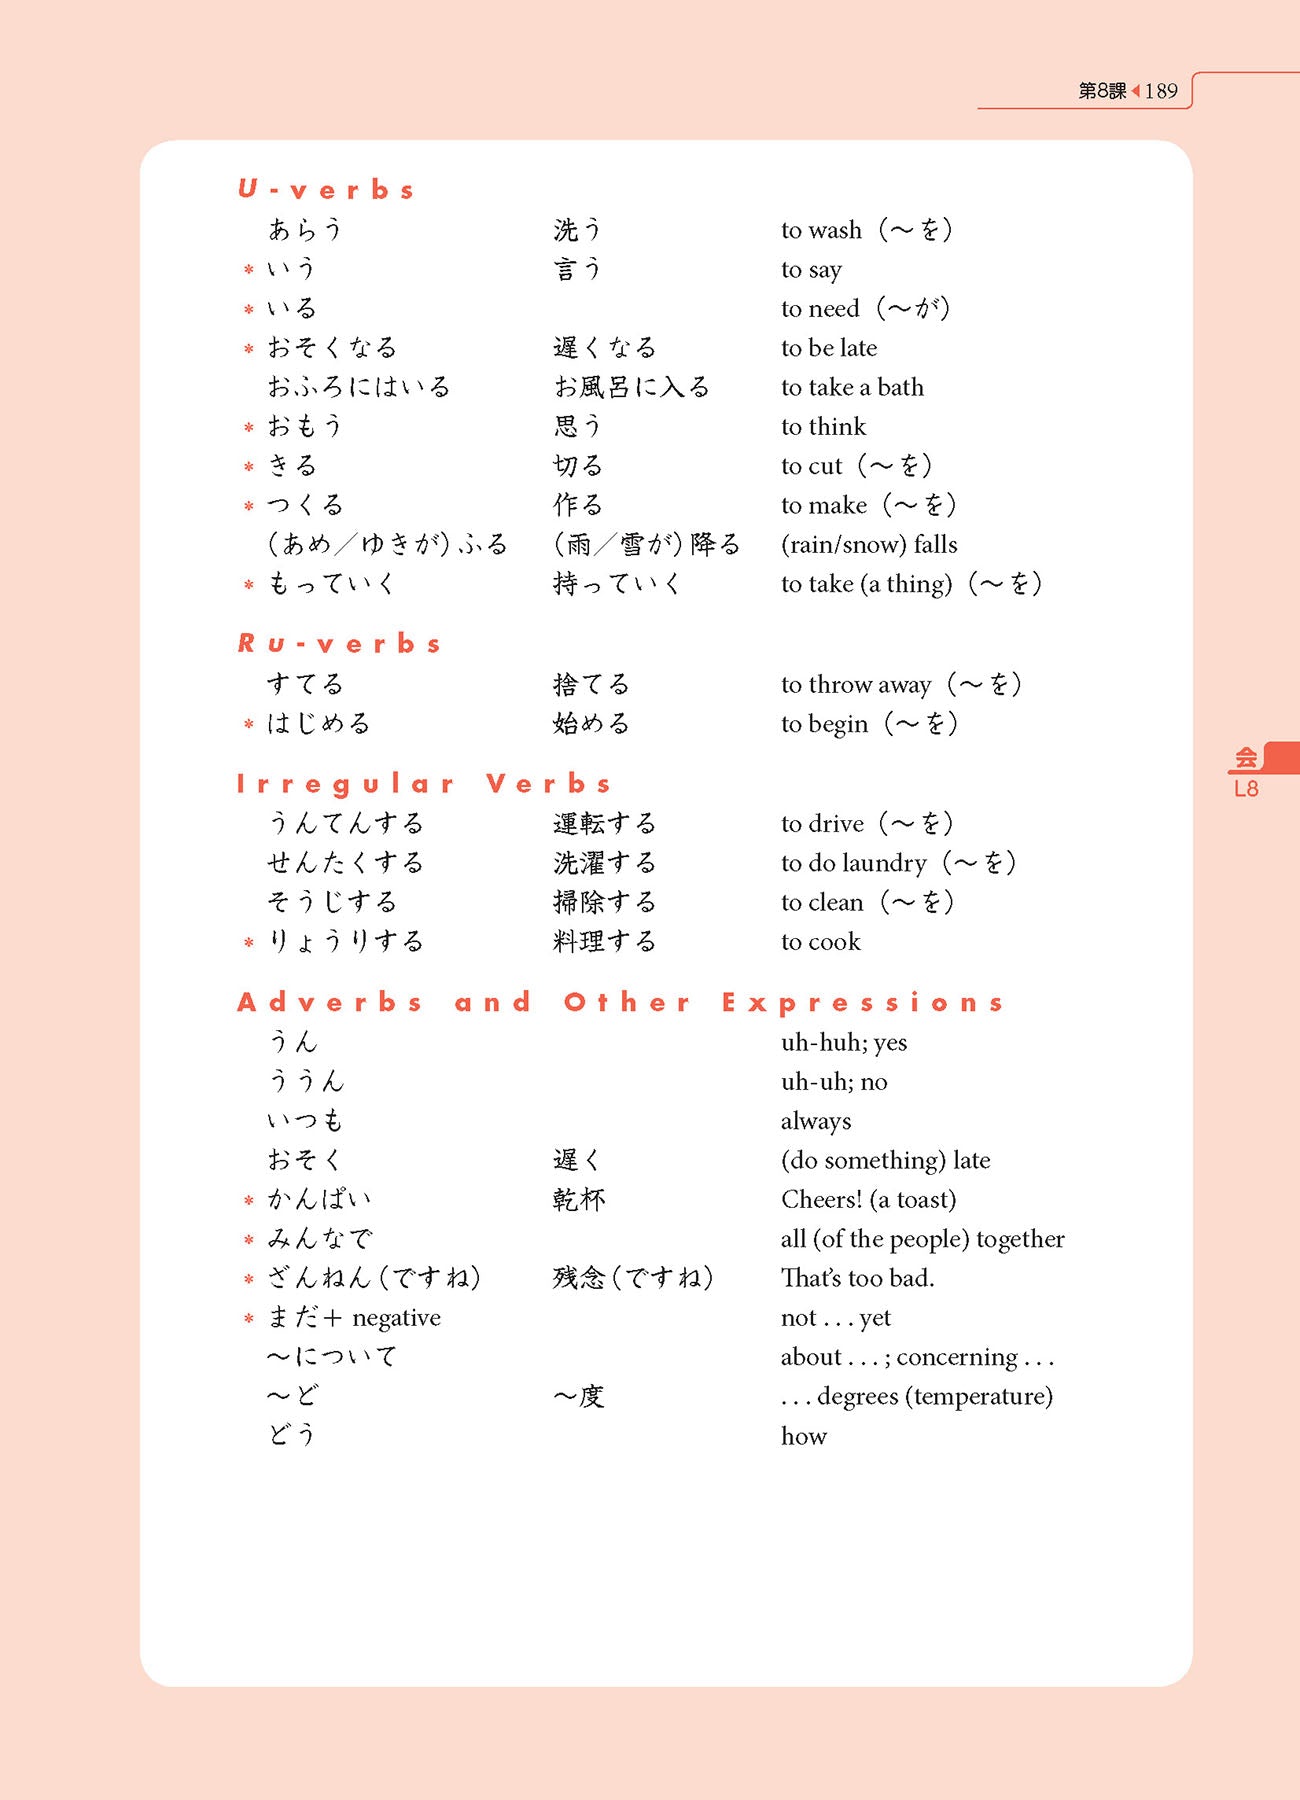 Genki Textbook 2 - Sample Page 4